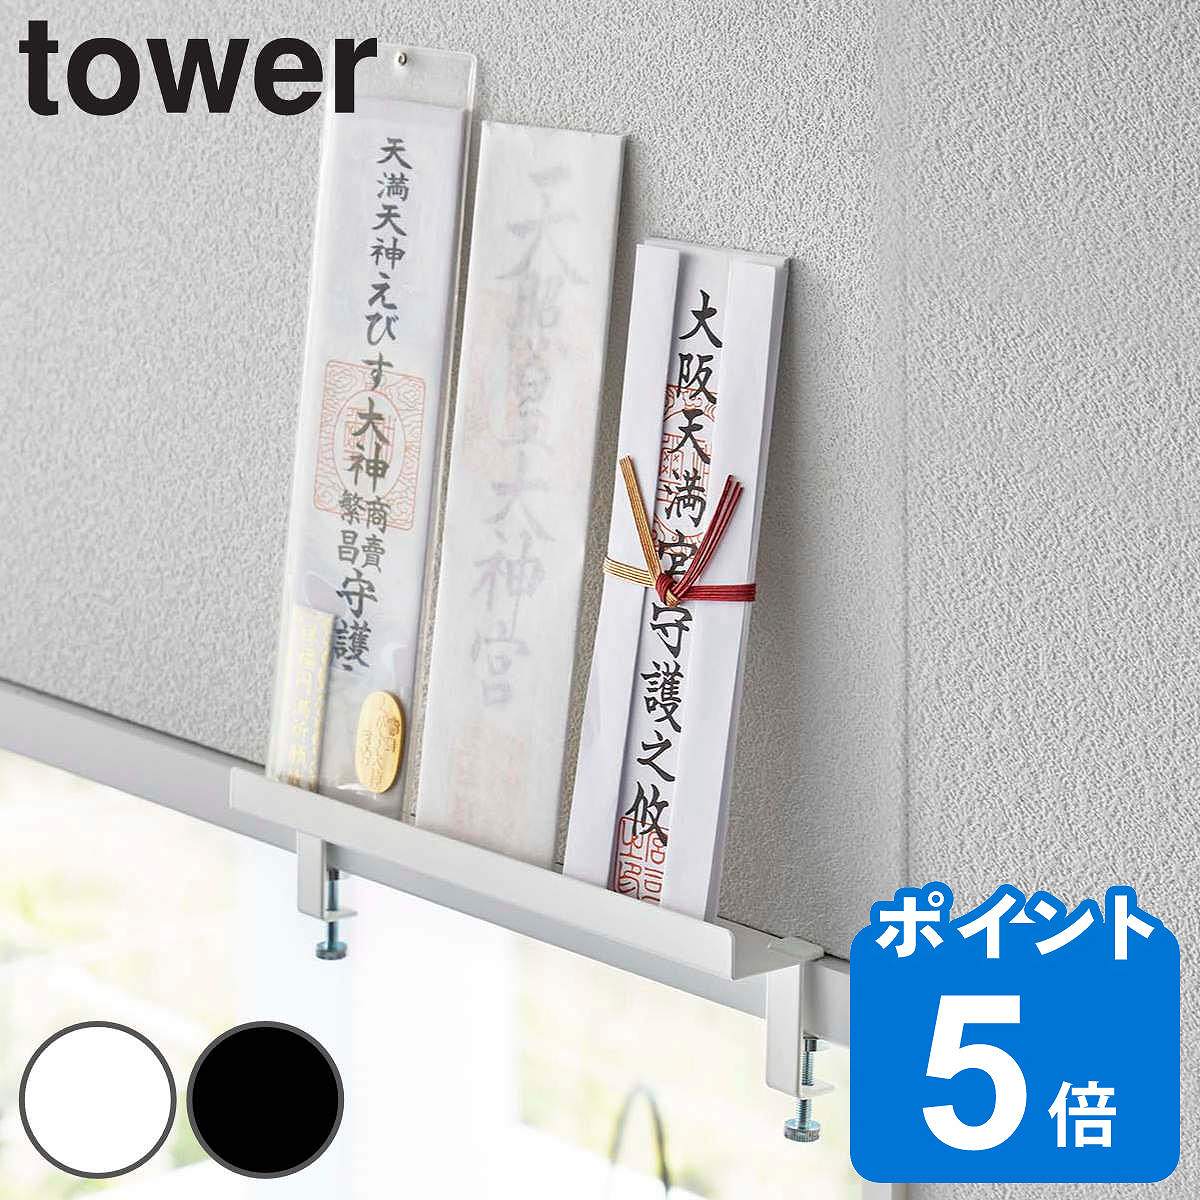 tower 鴨居上 神札スタンド タワー